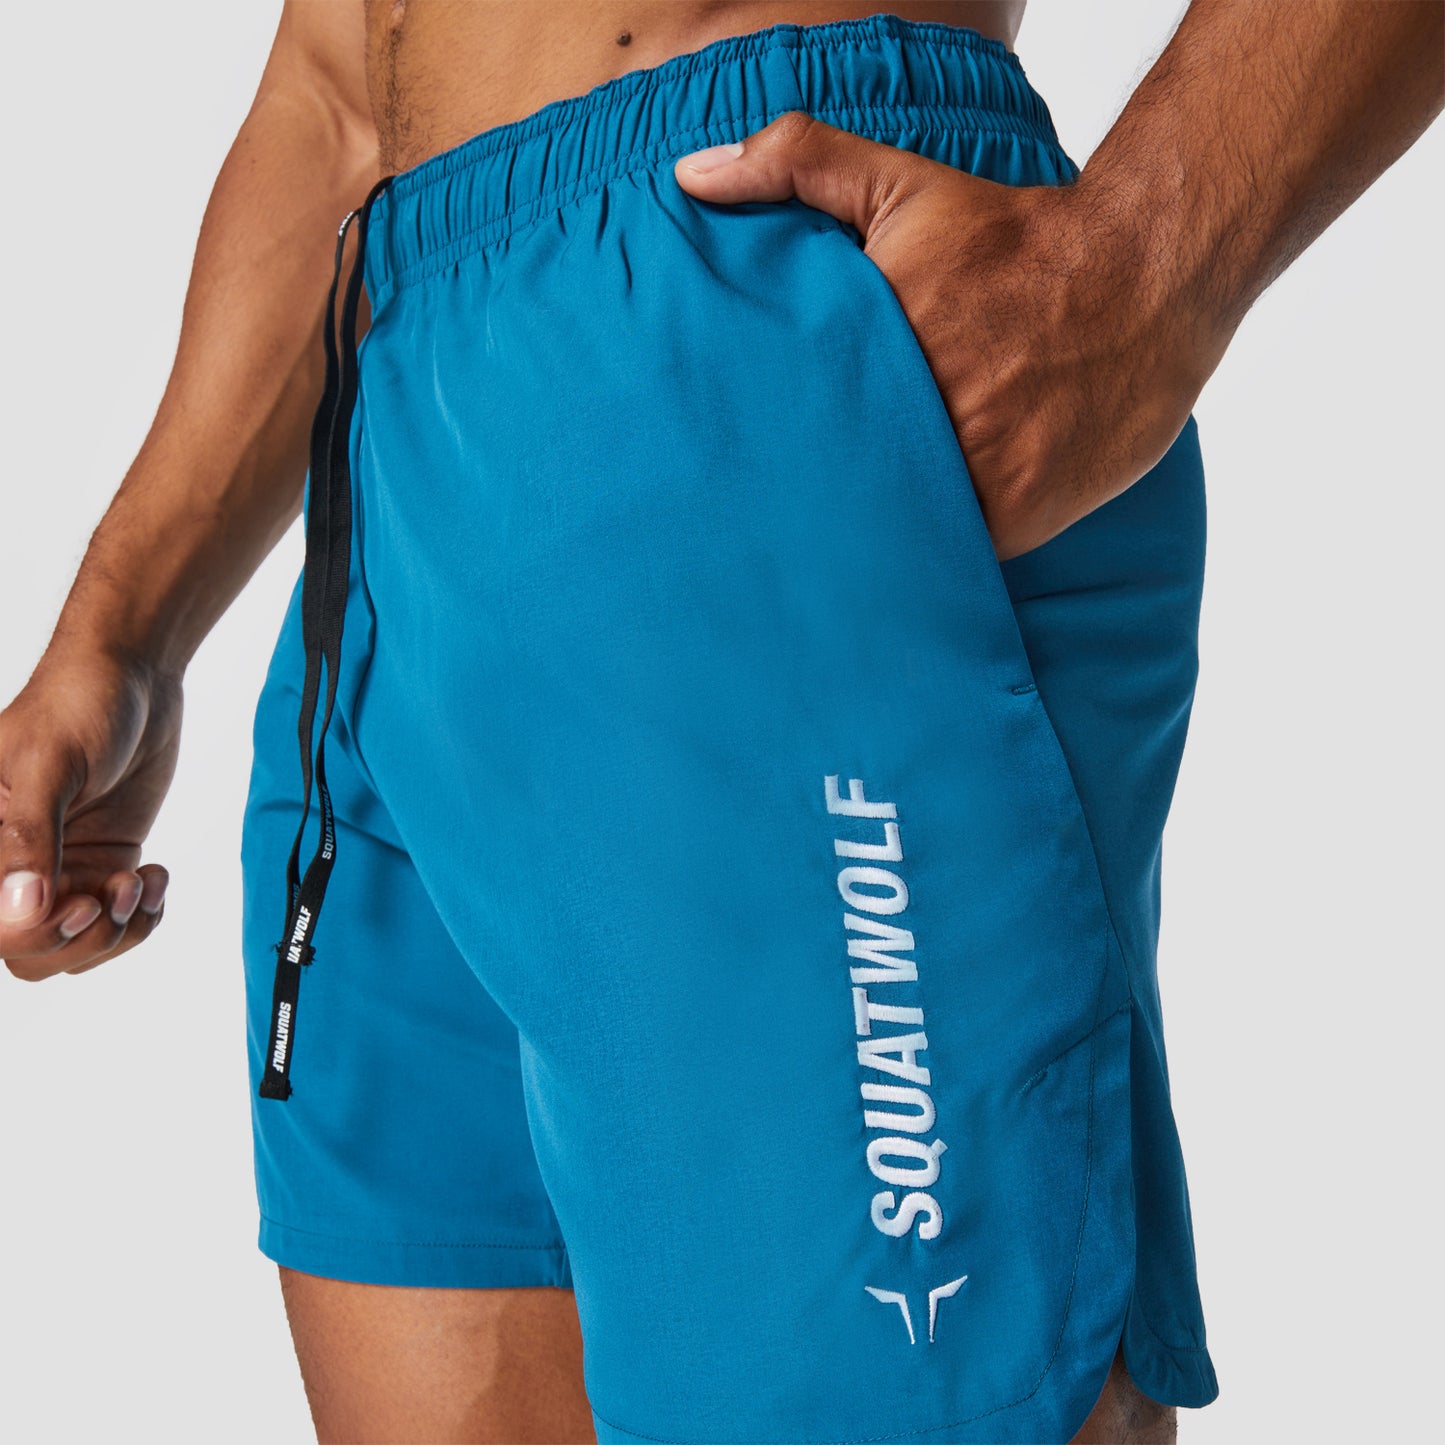 squatwolf-workout-short-for-men-warrior-shorts-teal-gym-wear